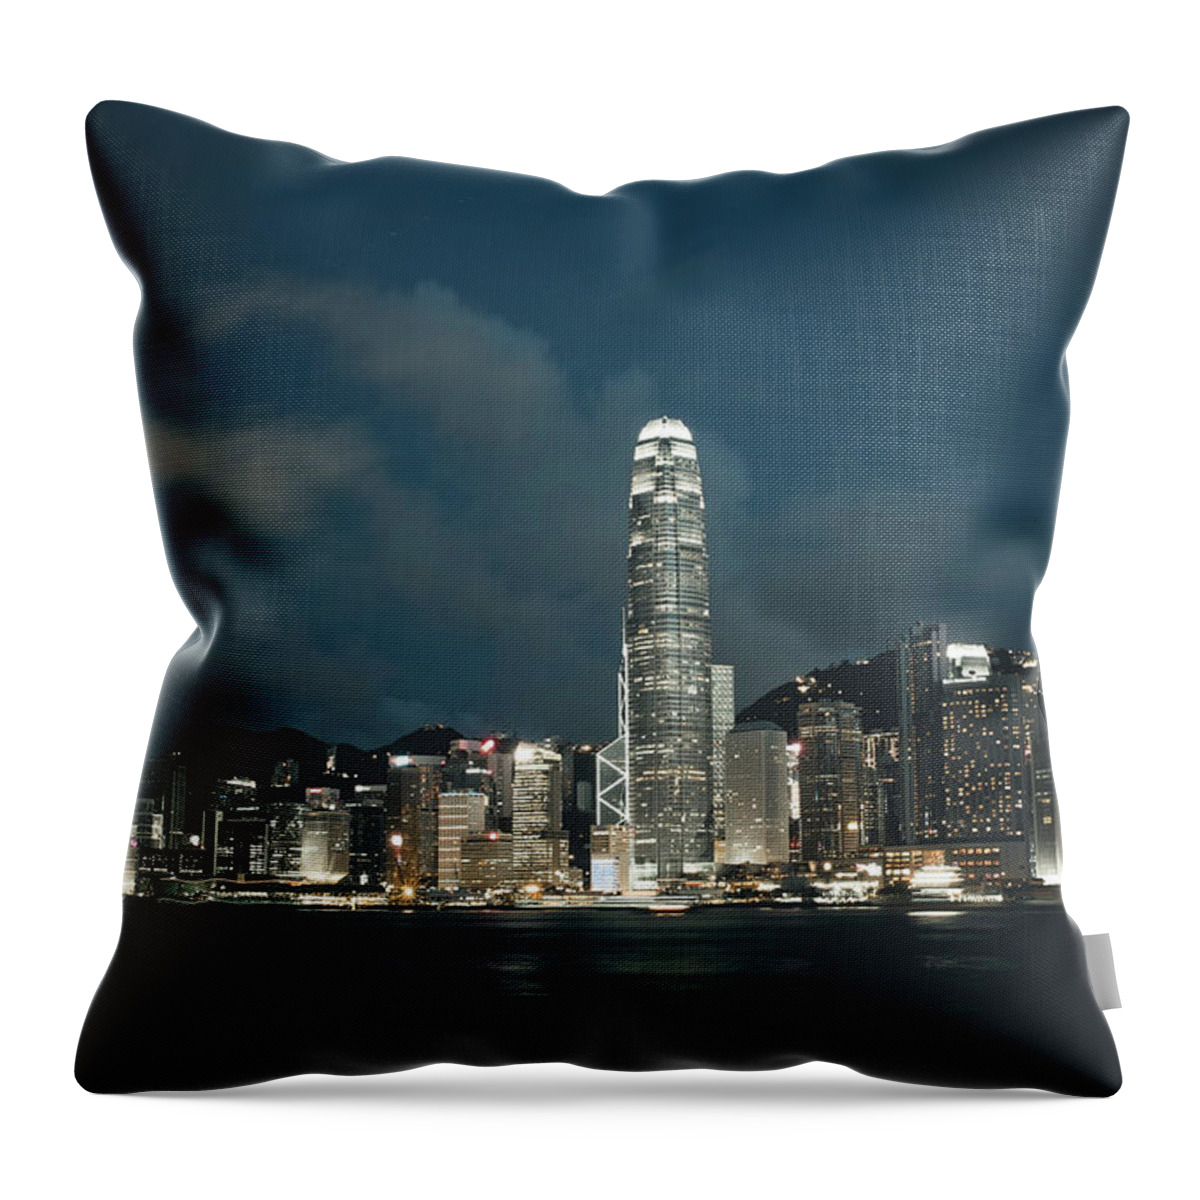 Outdoors Throw Pillow featuring the photograph International Finance Centre Of Hong by Jimmy Ll Tsang